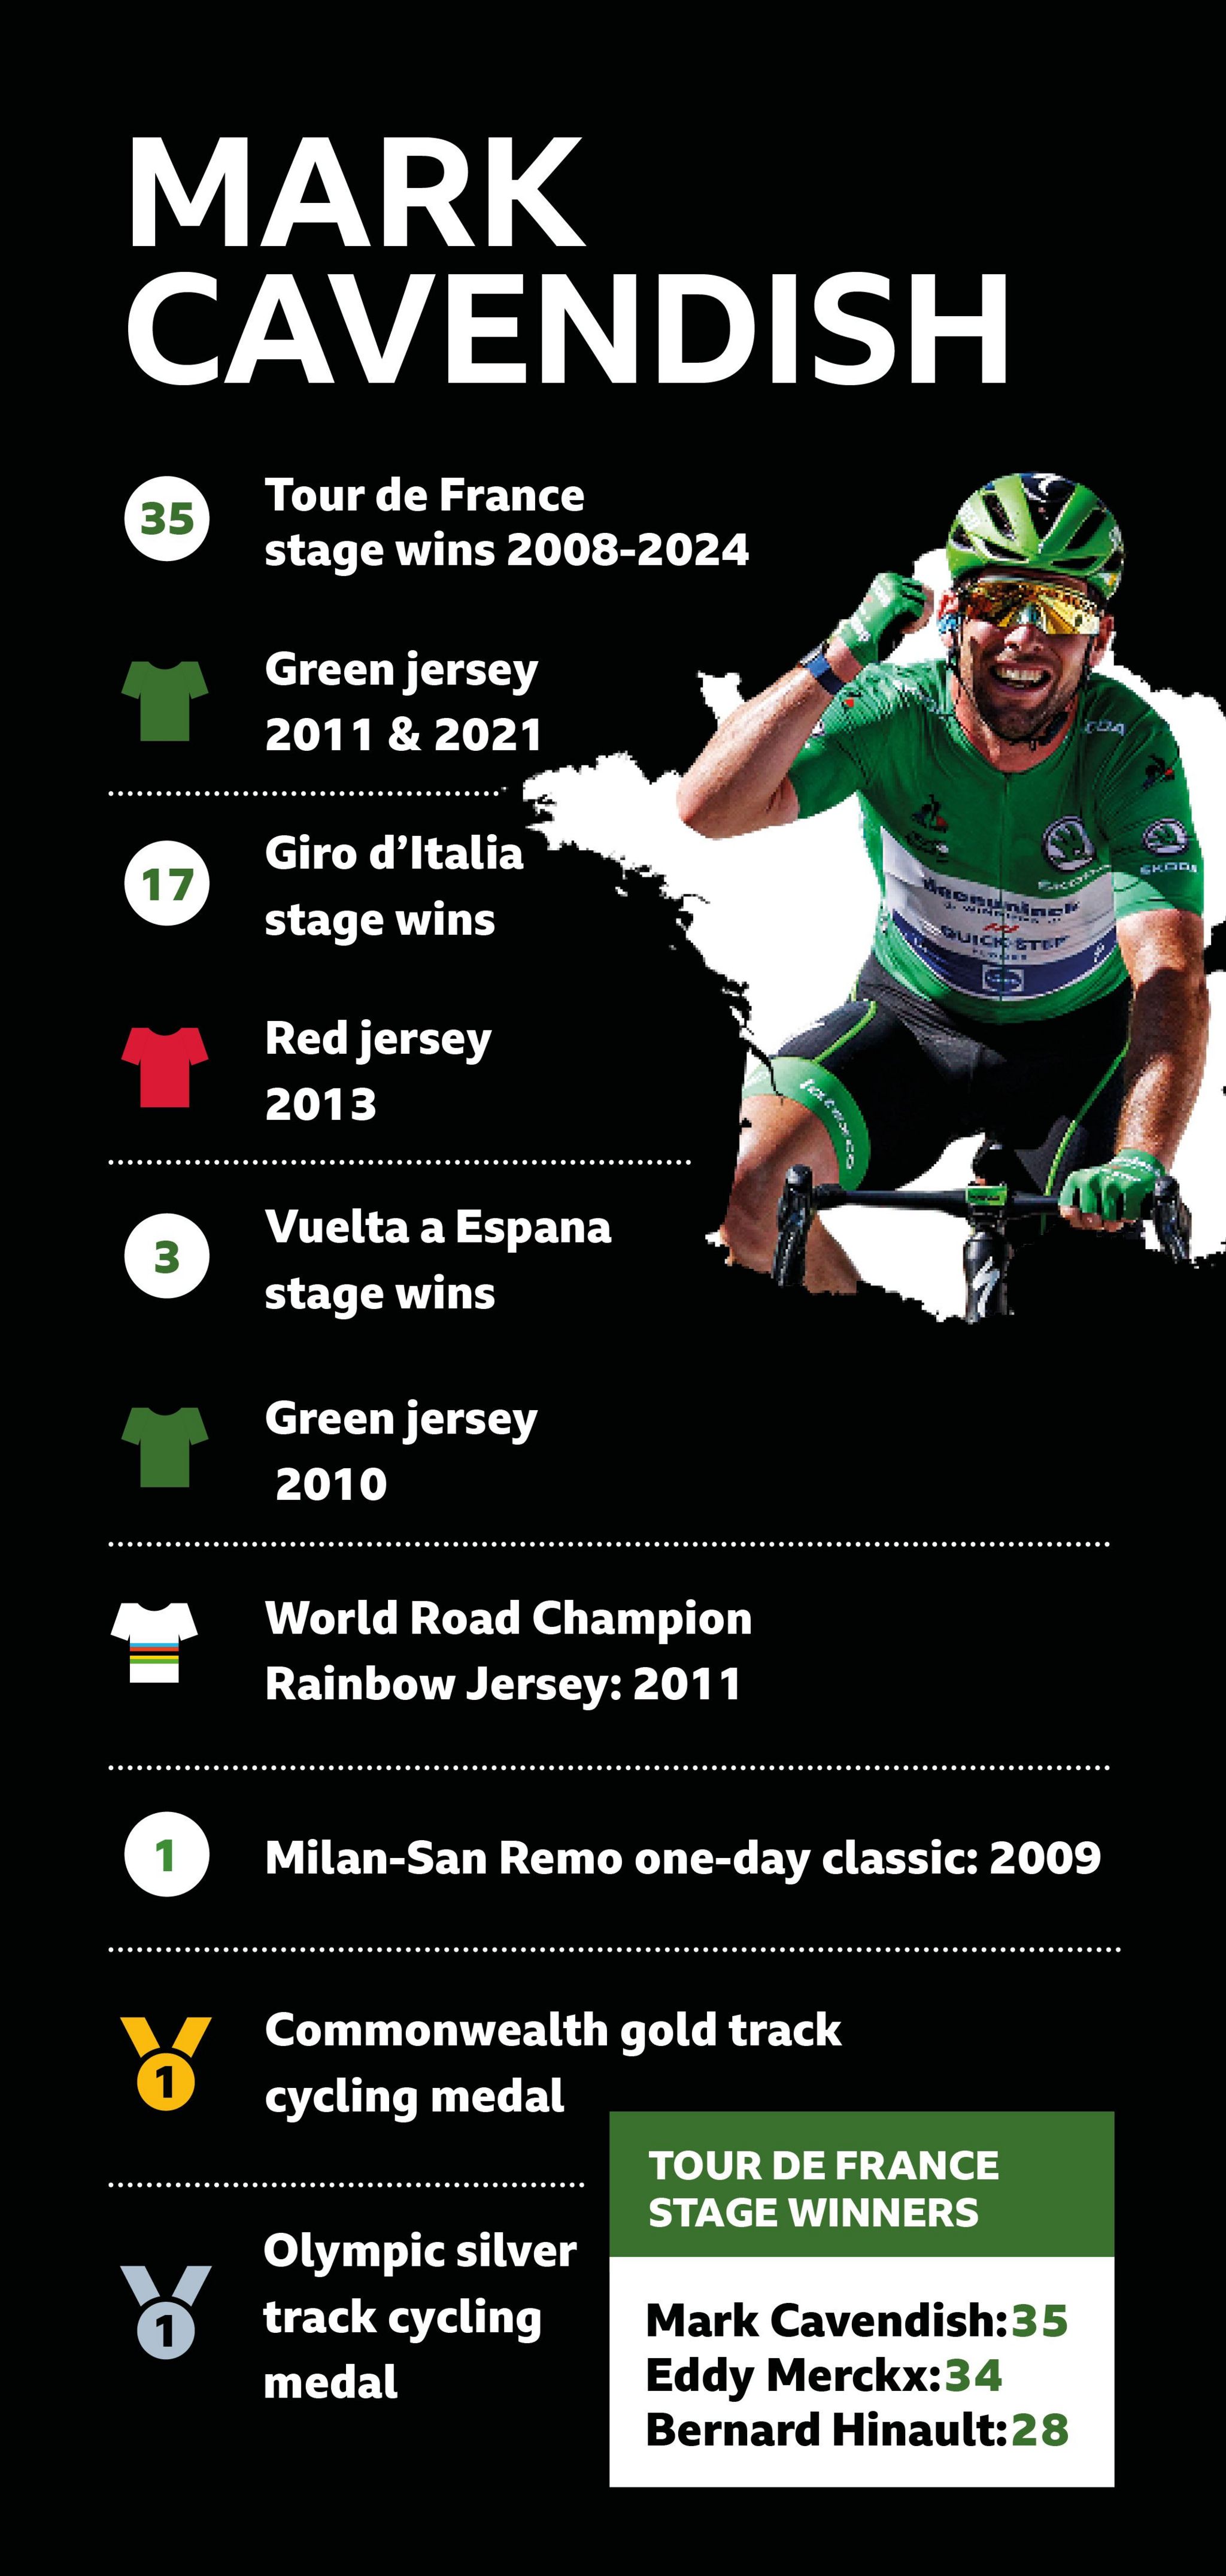 Mark Cavendish's career in numbers